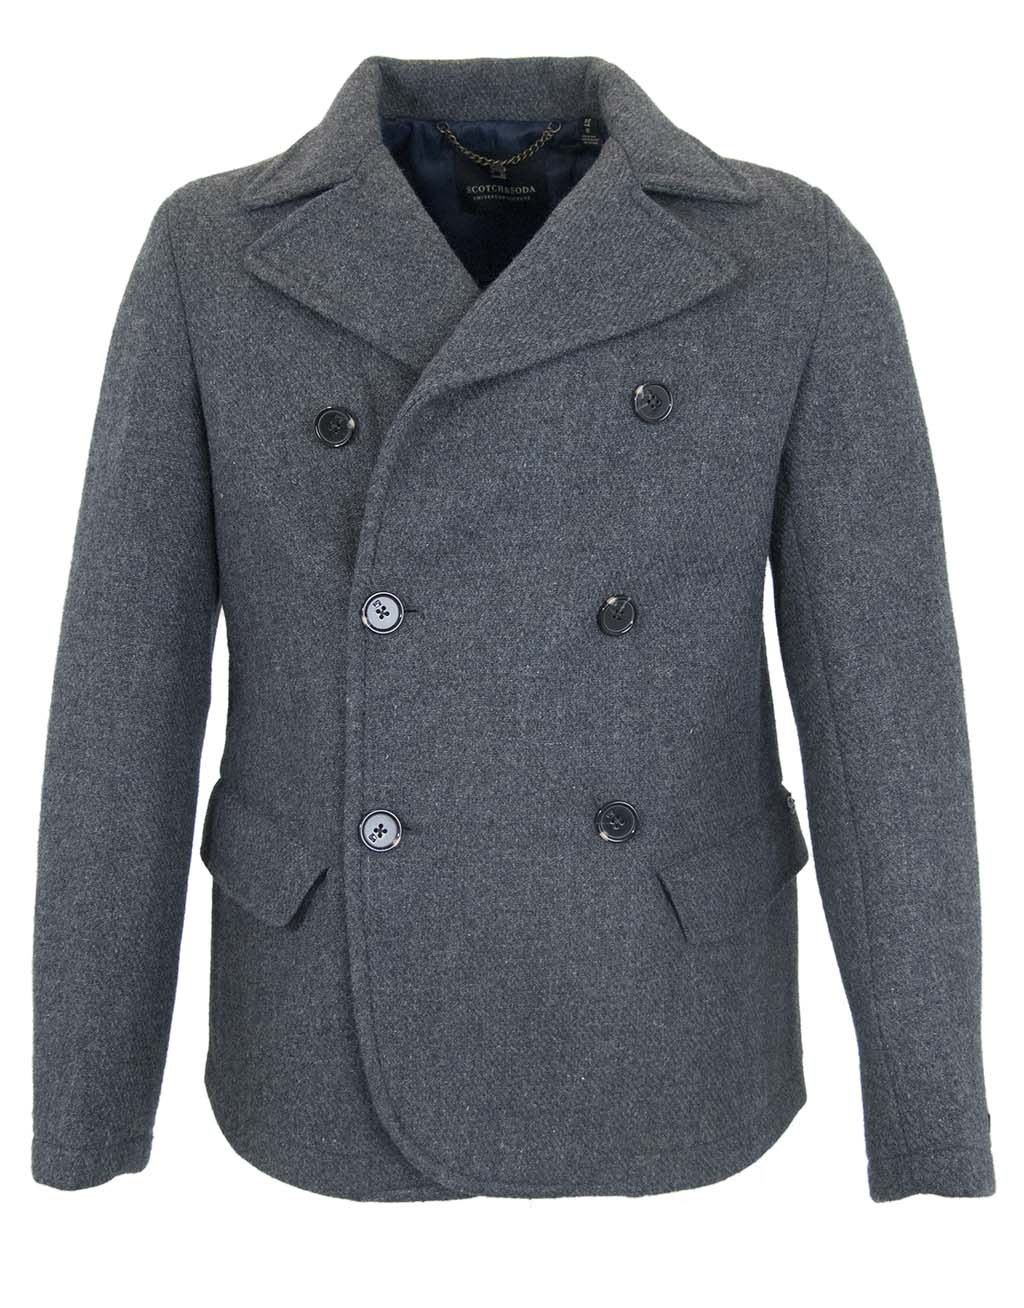 Scotch & Soda Caban Pea Coat Grey Wool Jacket BNWT 100% Authentic by S ...